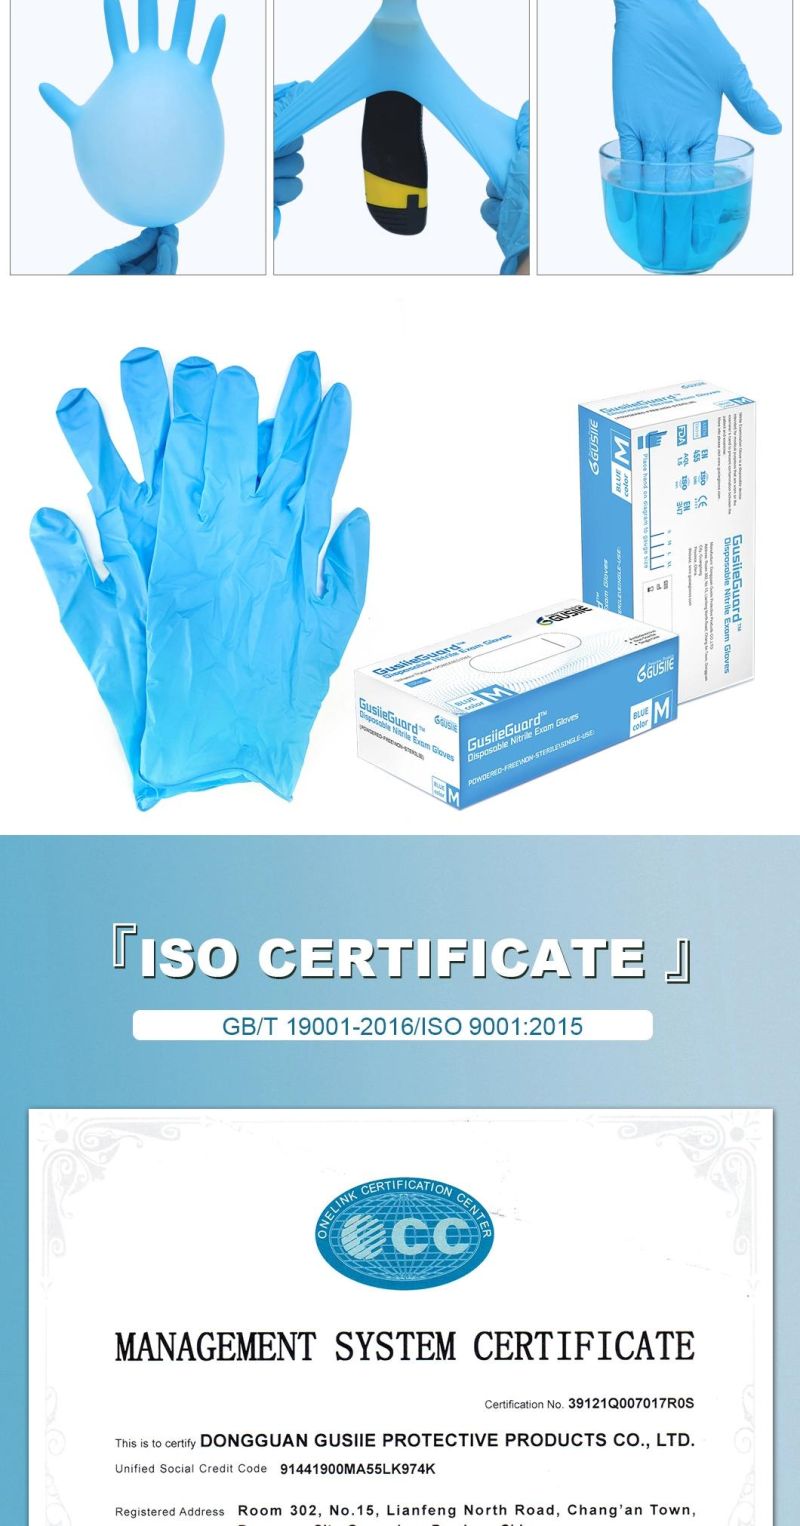 Gusiie Powder Free Disposable Examination Medical Examination Nitrile Gloves